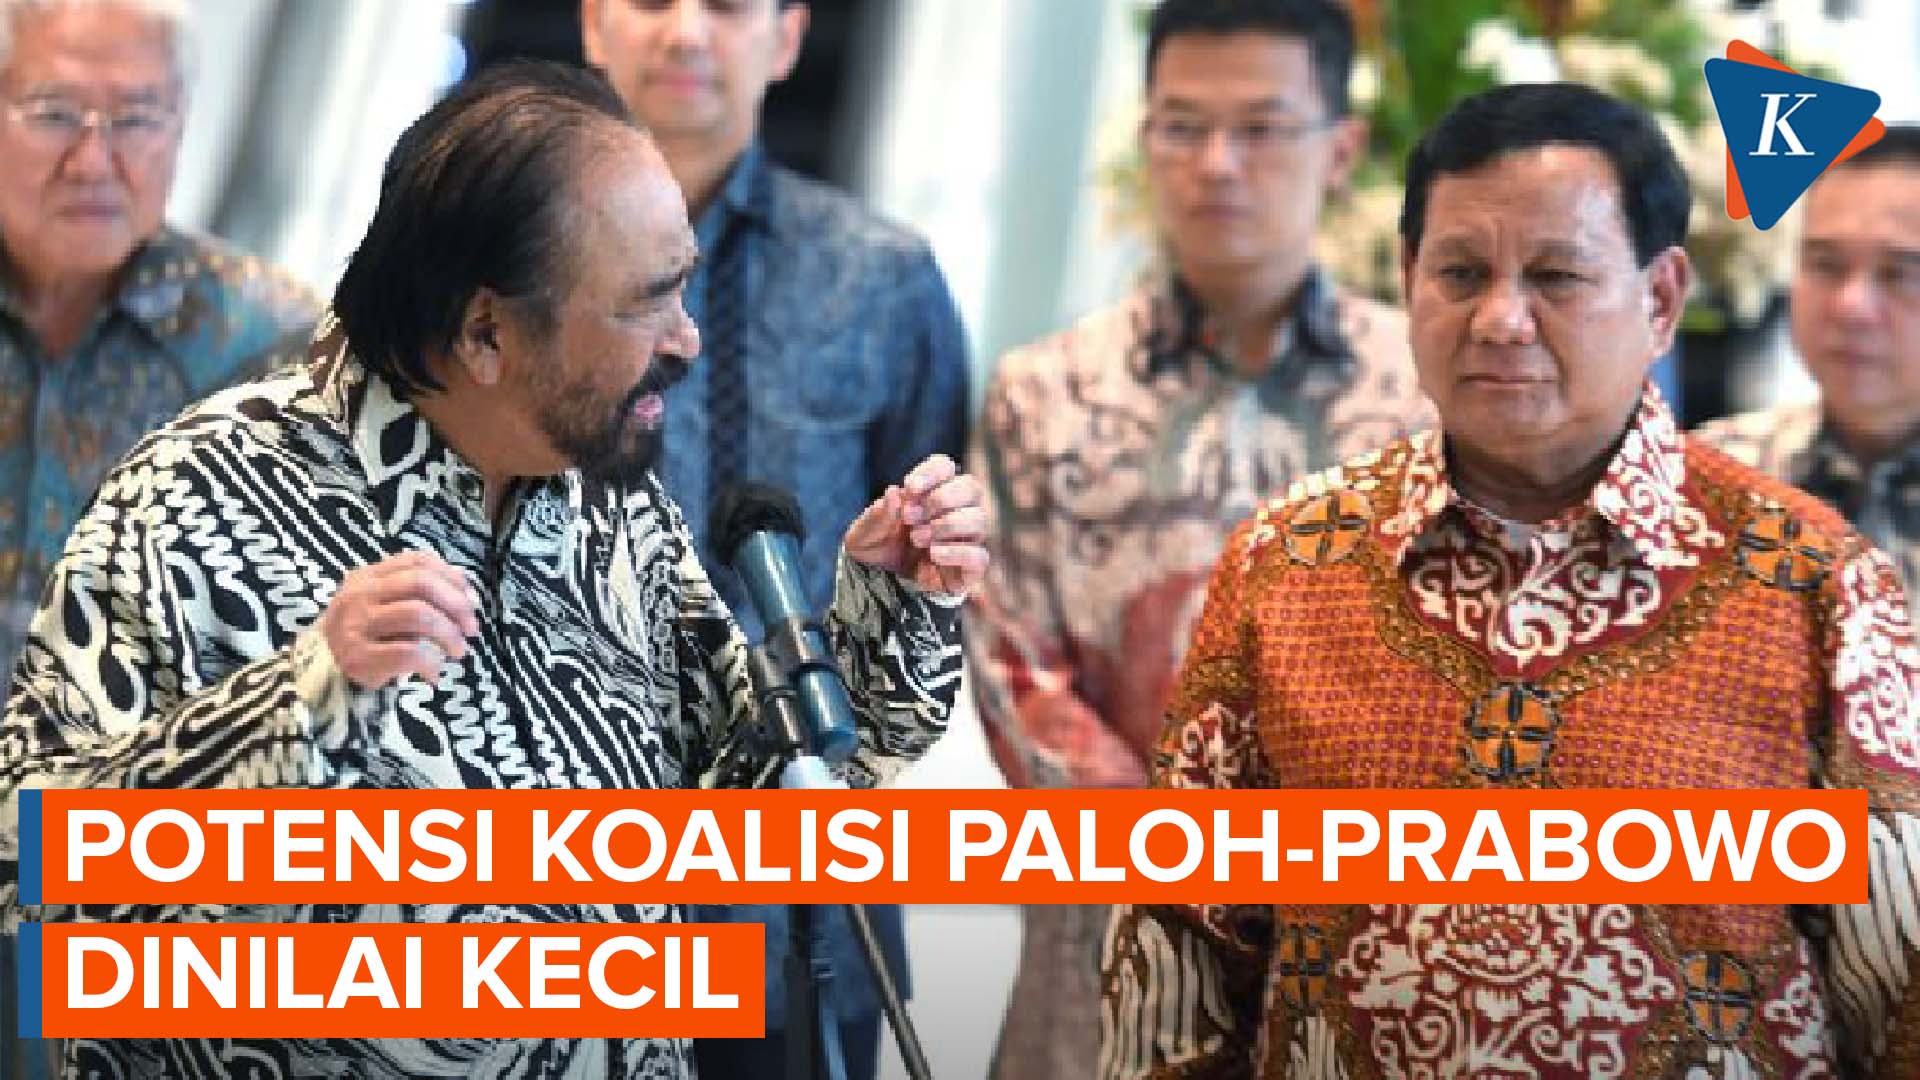 Meski Dekat, Kecil Kemungkinan Prabowo dan Surya Paloh Berkoalisi